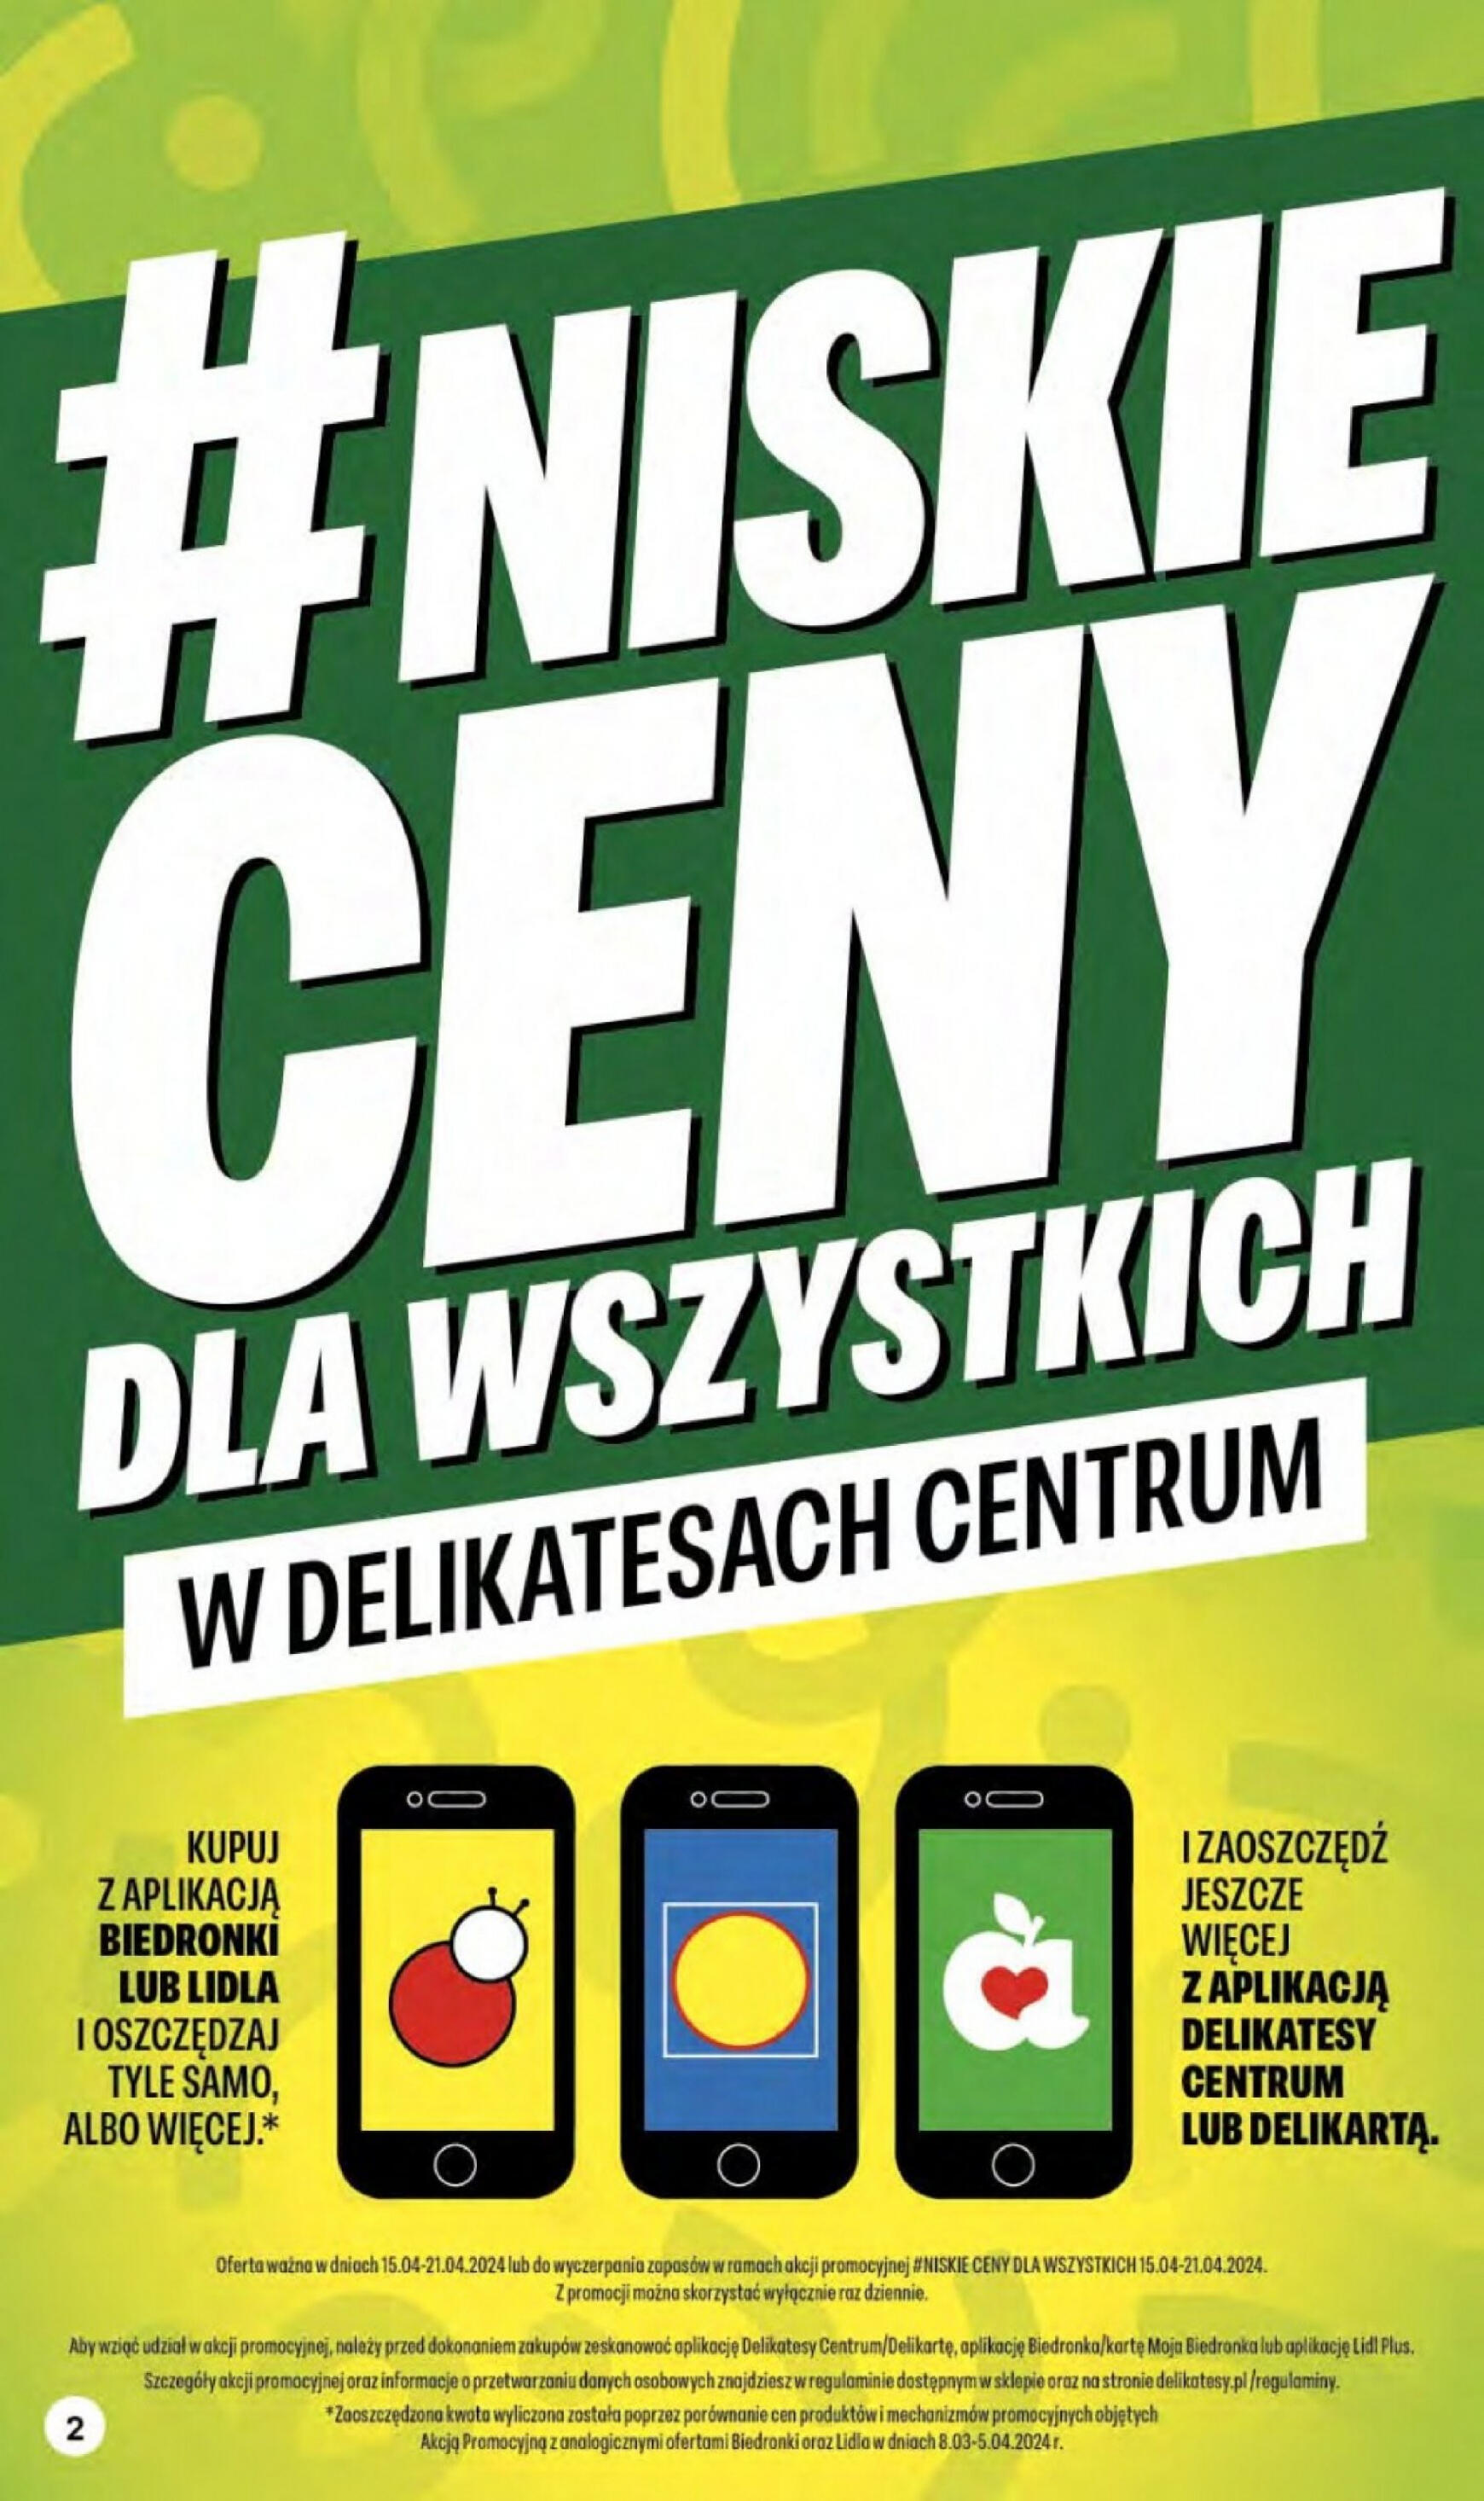 delikatesy-centrum - Delikatesy Centrum gazetka aktualna ważna od 18.04. - 24.04. - page: 2